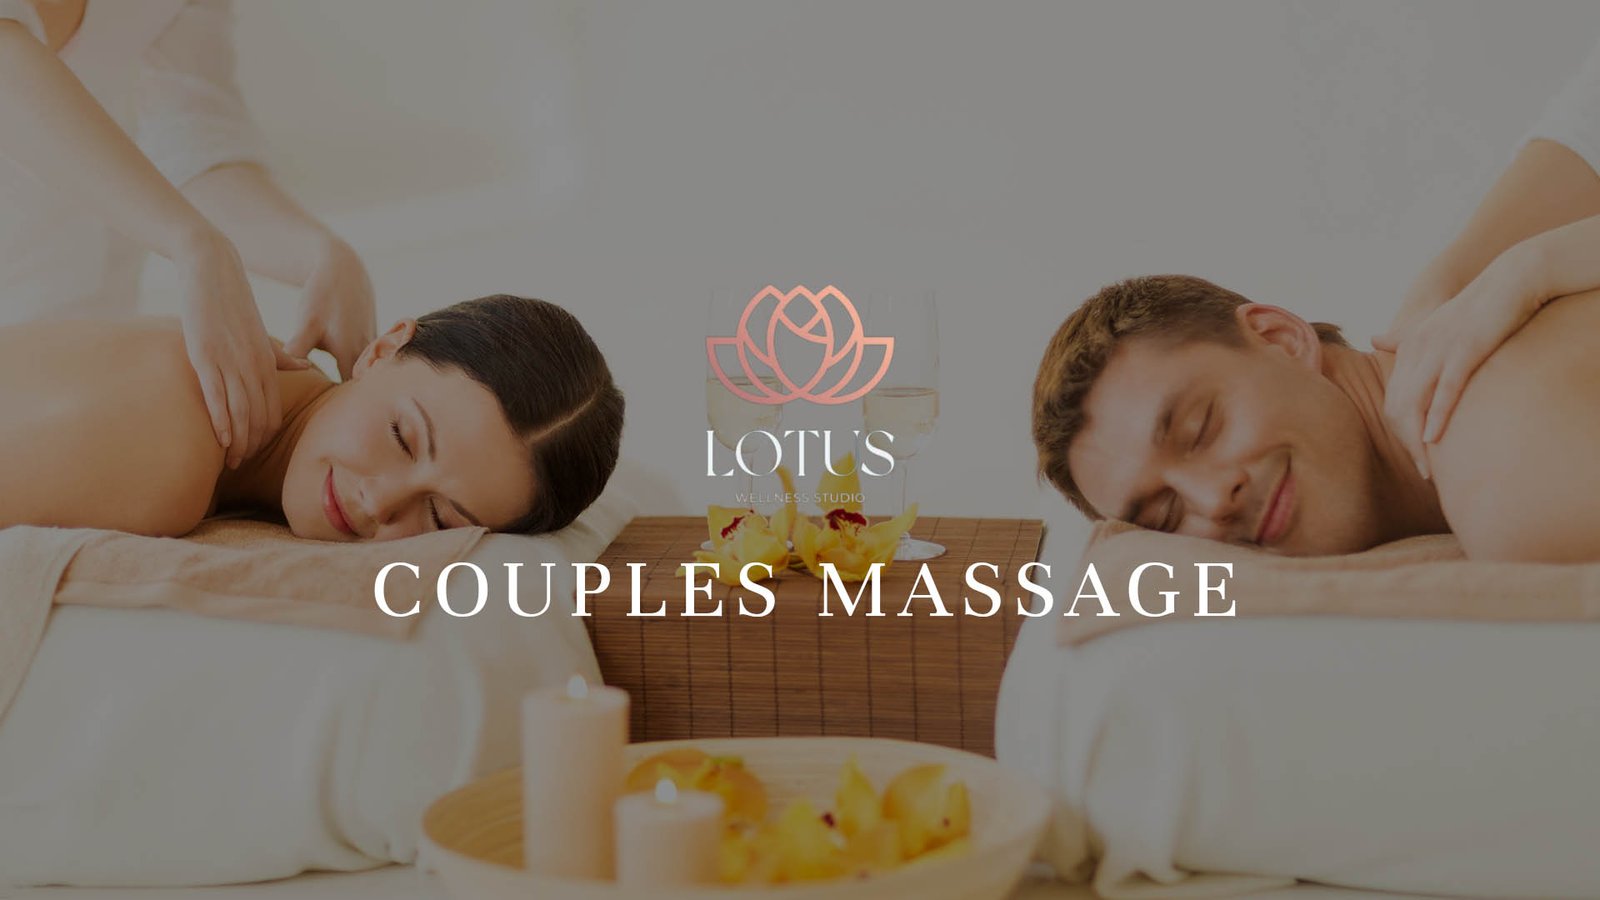 4. Couples Massage